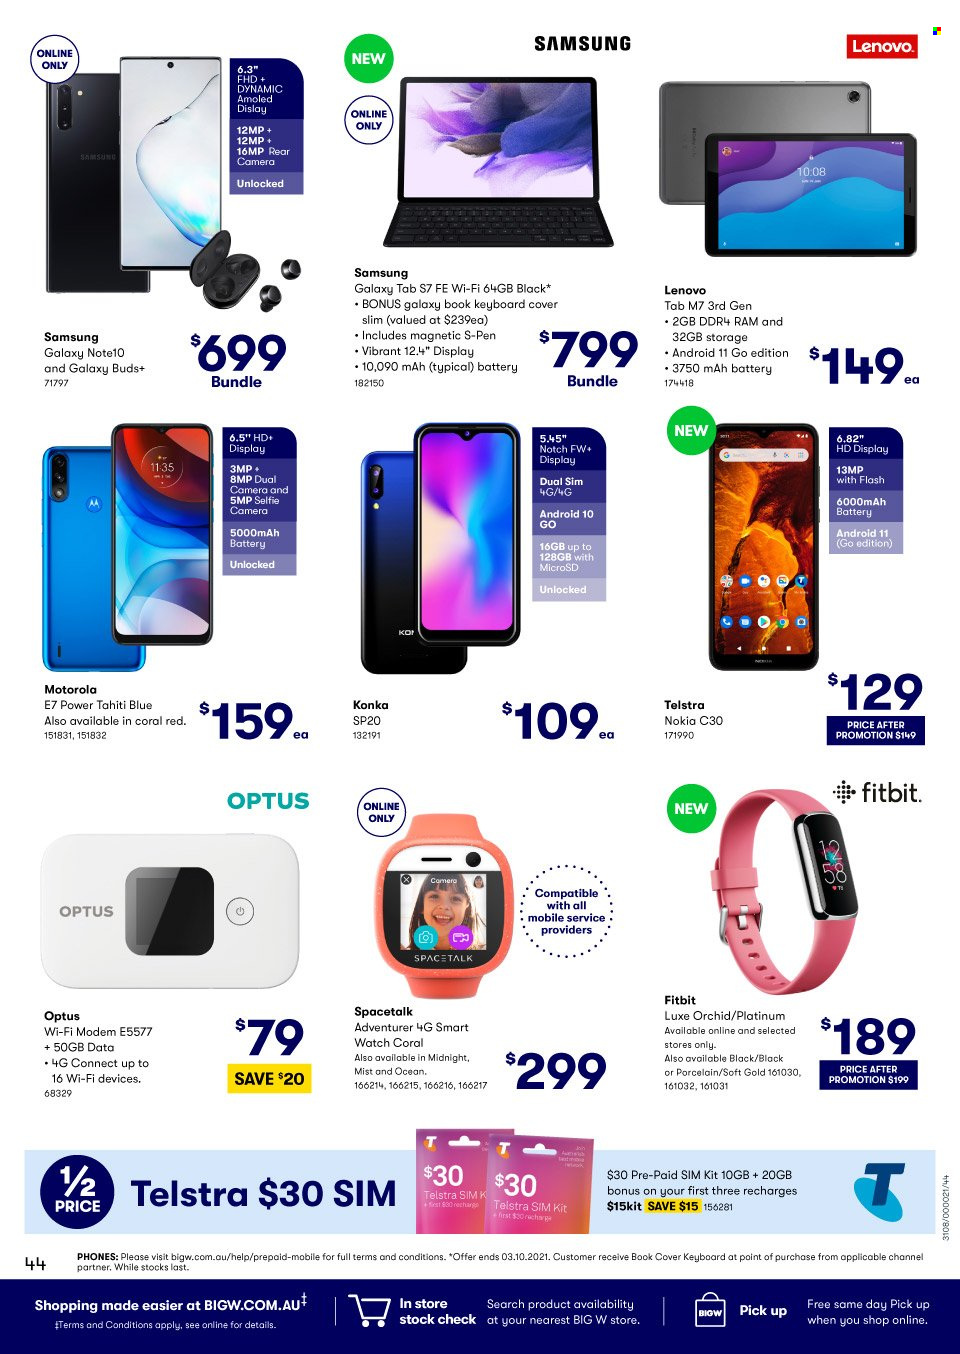 thumbnail - BIG W Catalogue - Sales products - pen, book, keyboard, Lenovo, Motorola, Samsung, Nokia, Samsung Galaxy, Optus, Fitbit, watch. Page 44.